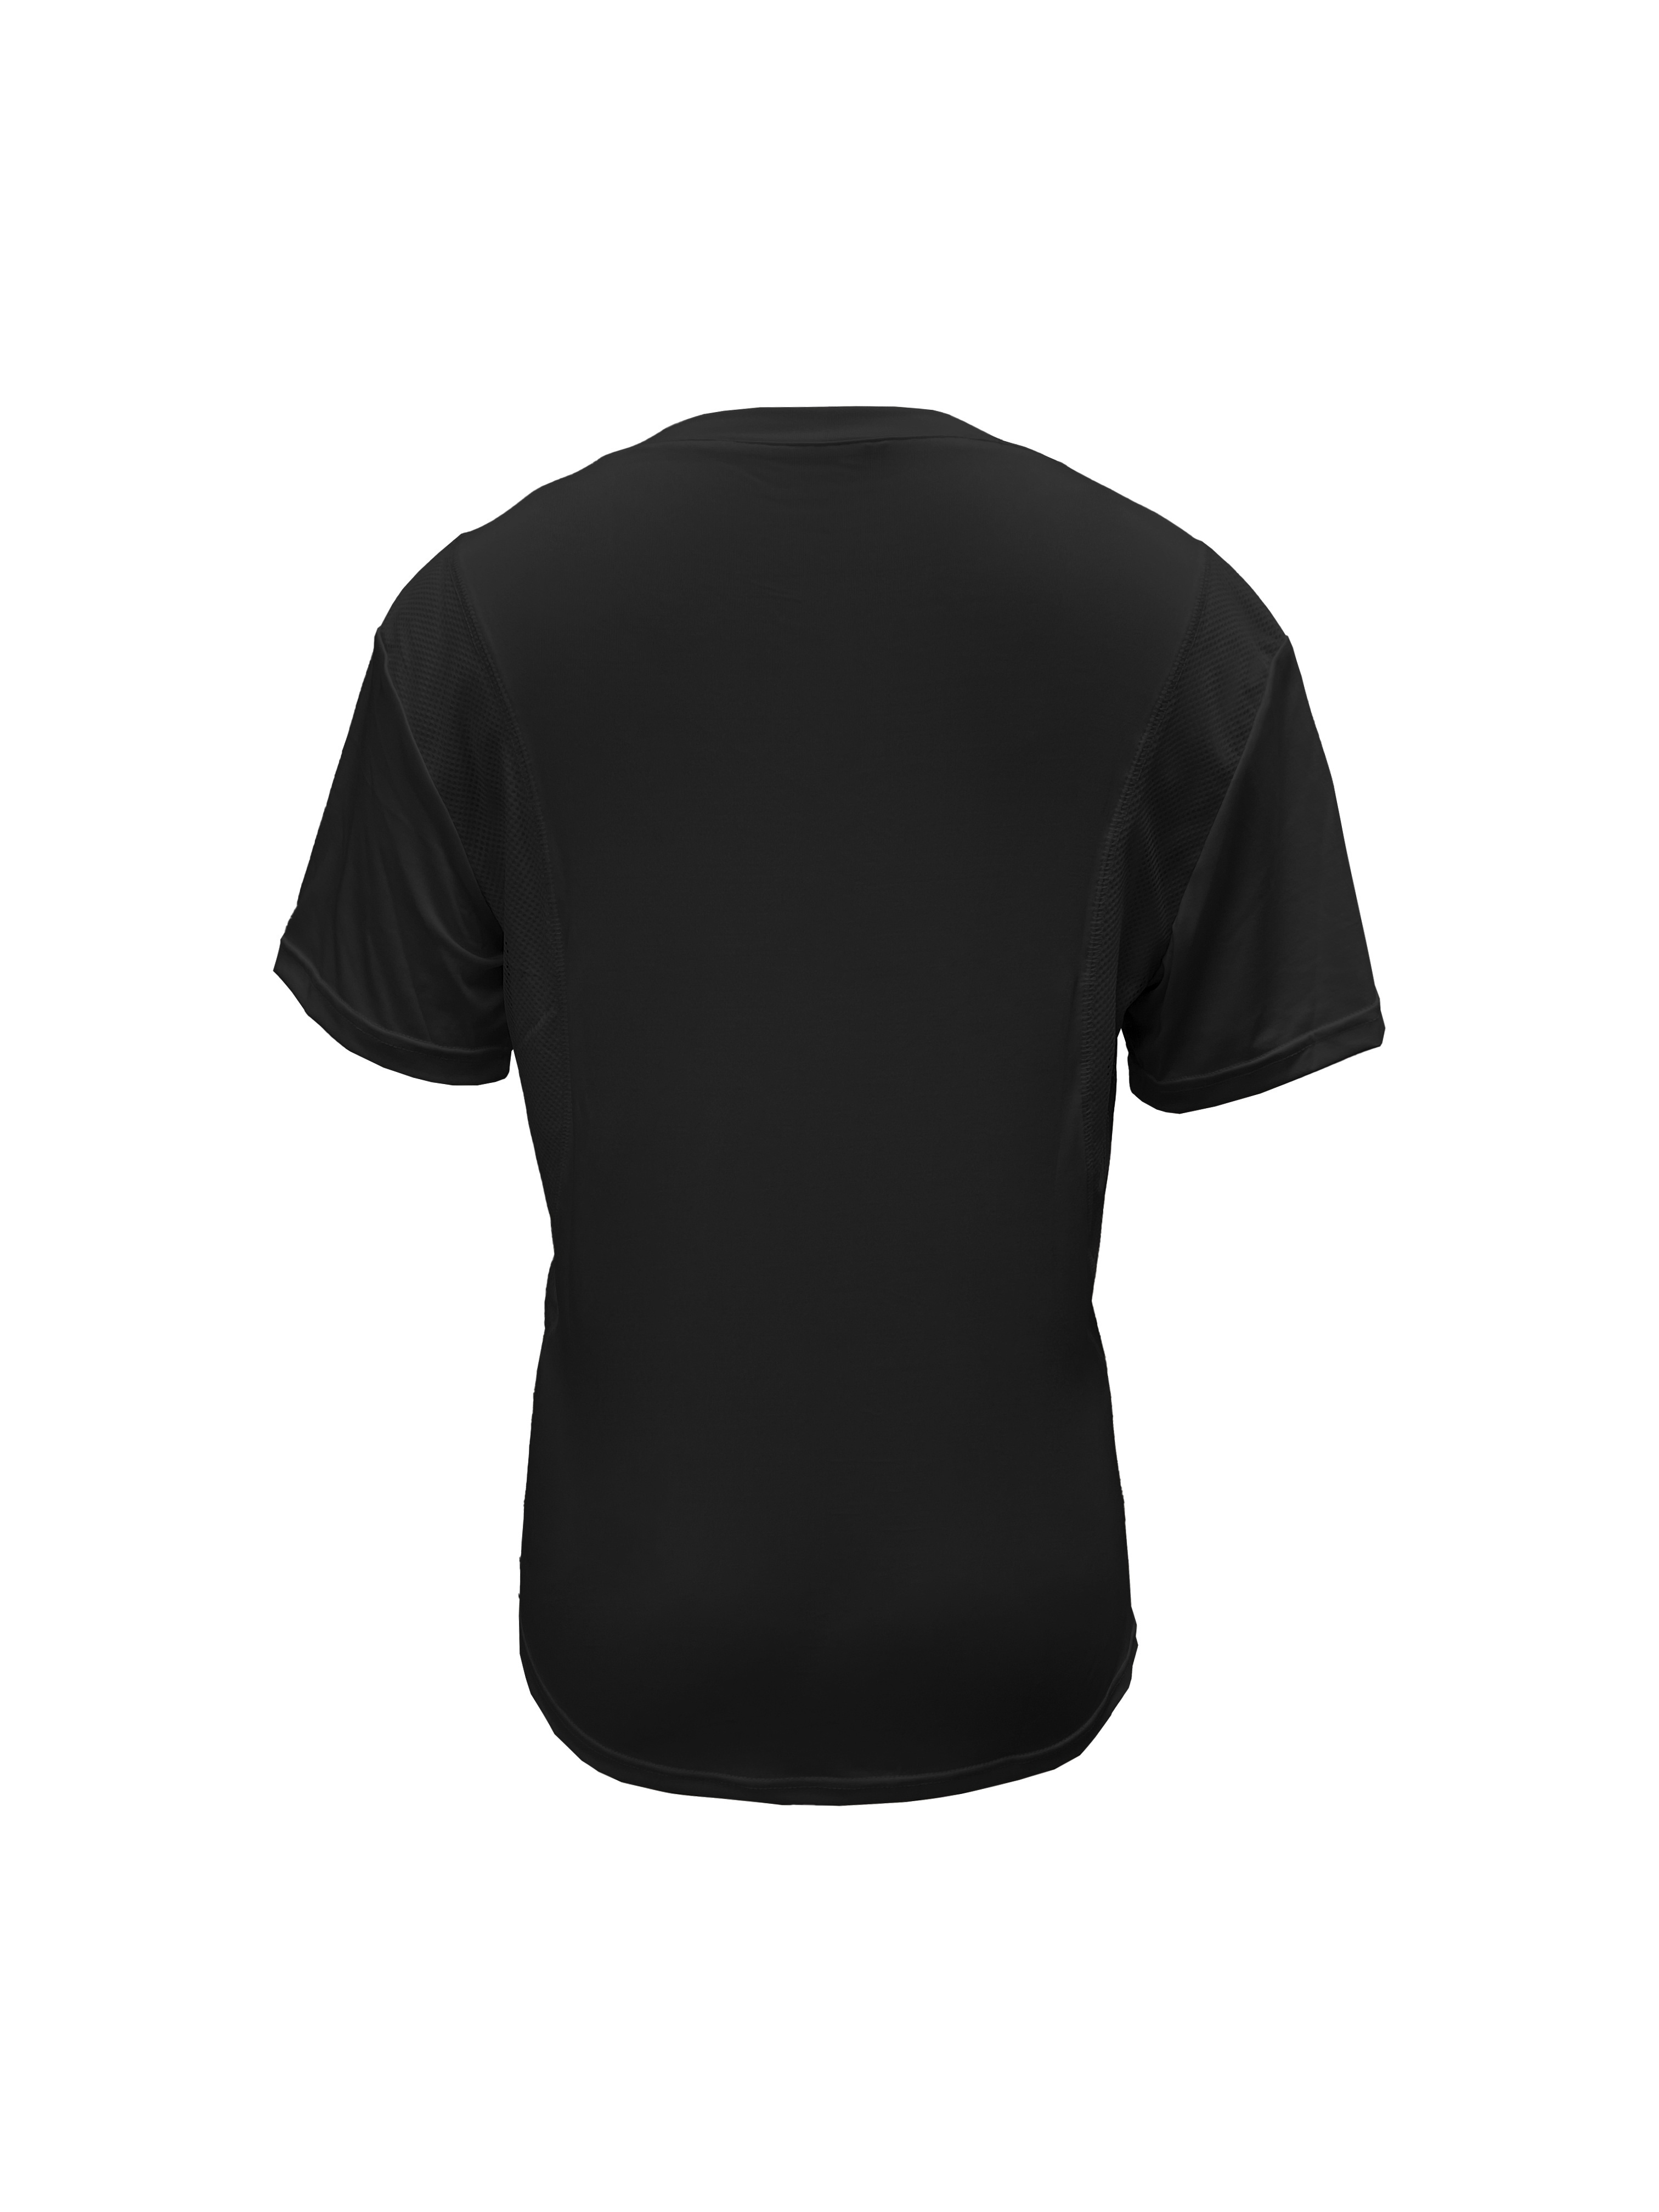 Tactical Utility Black Crew Neck T-Shirt